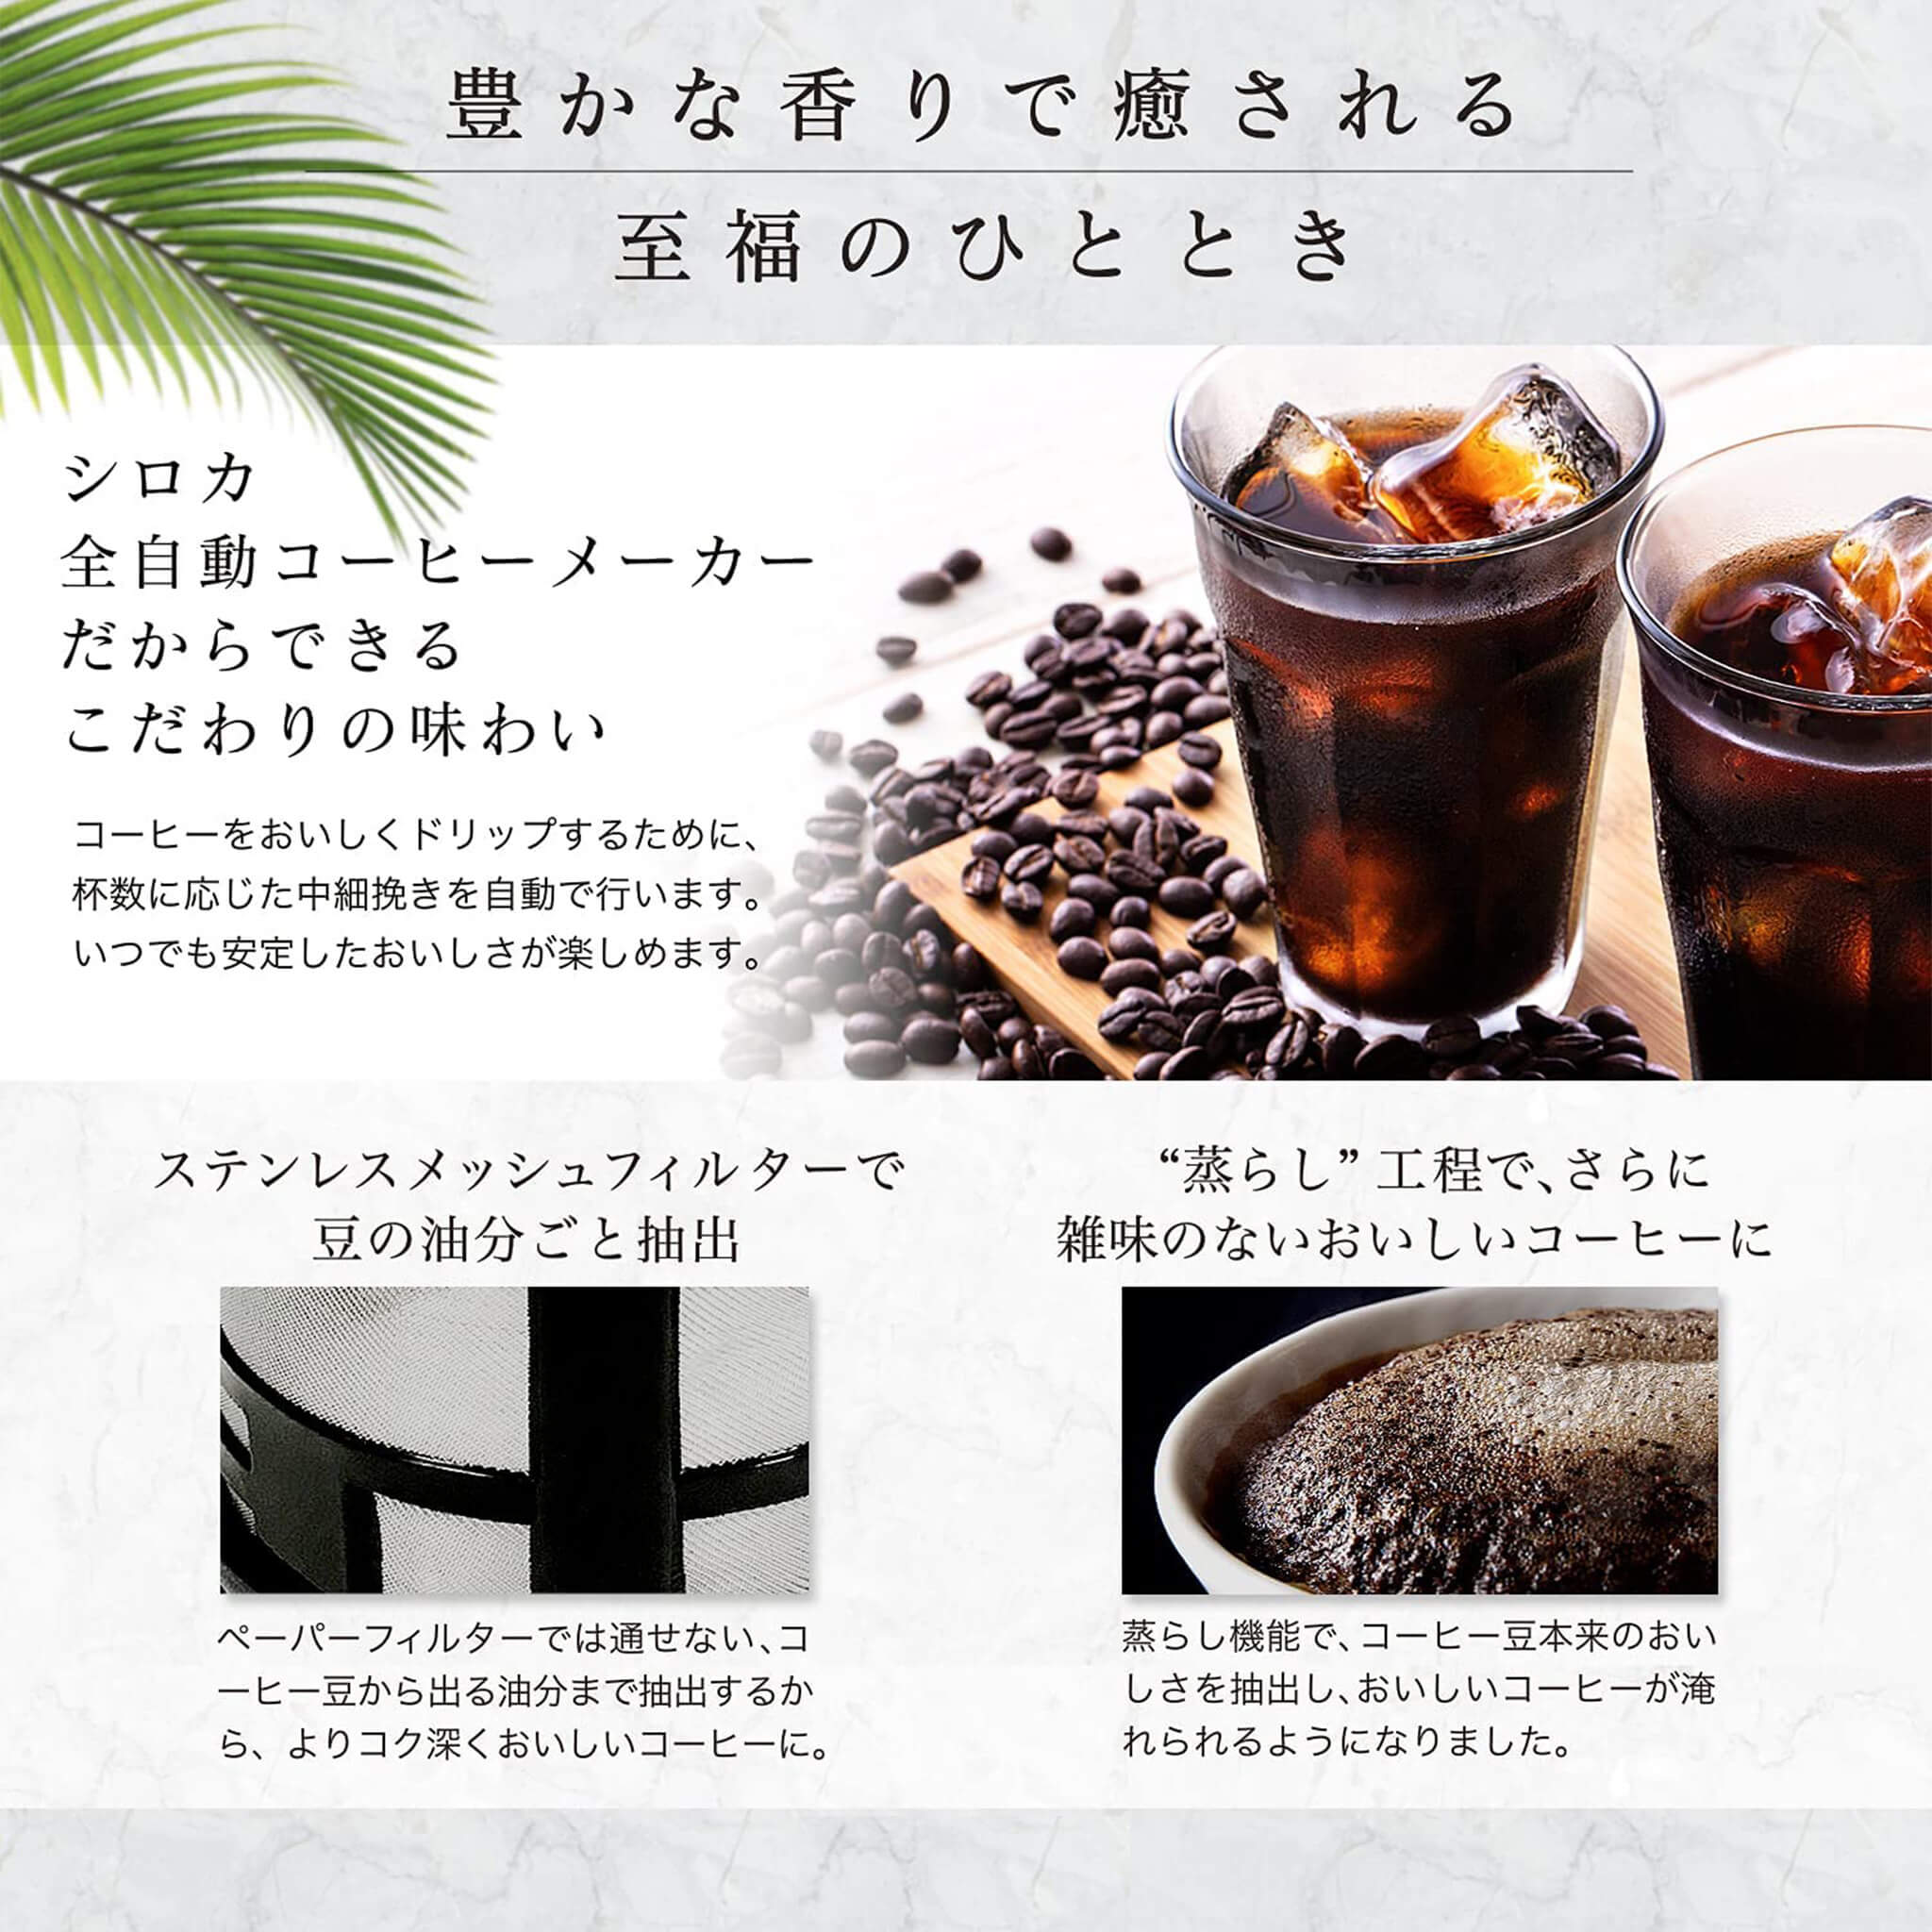 siroca(シロカ)　全自動コーヒーメーカー SC-A211 豆・粉両対応